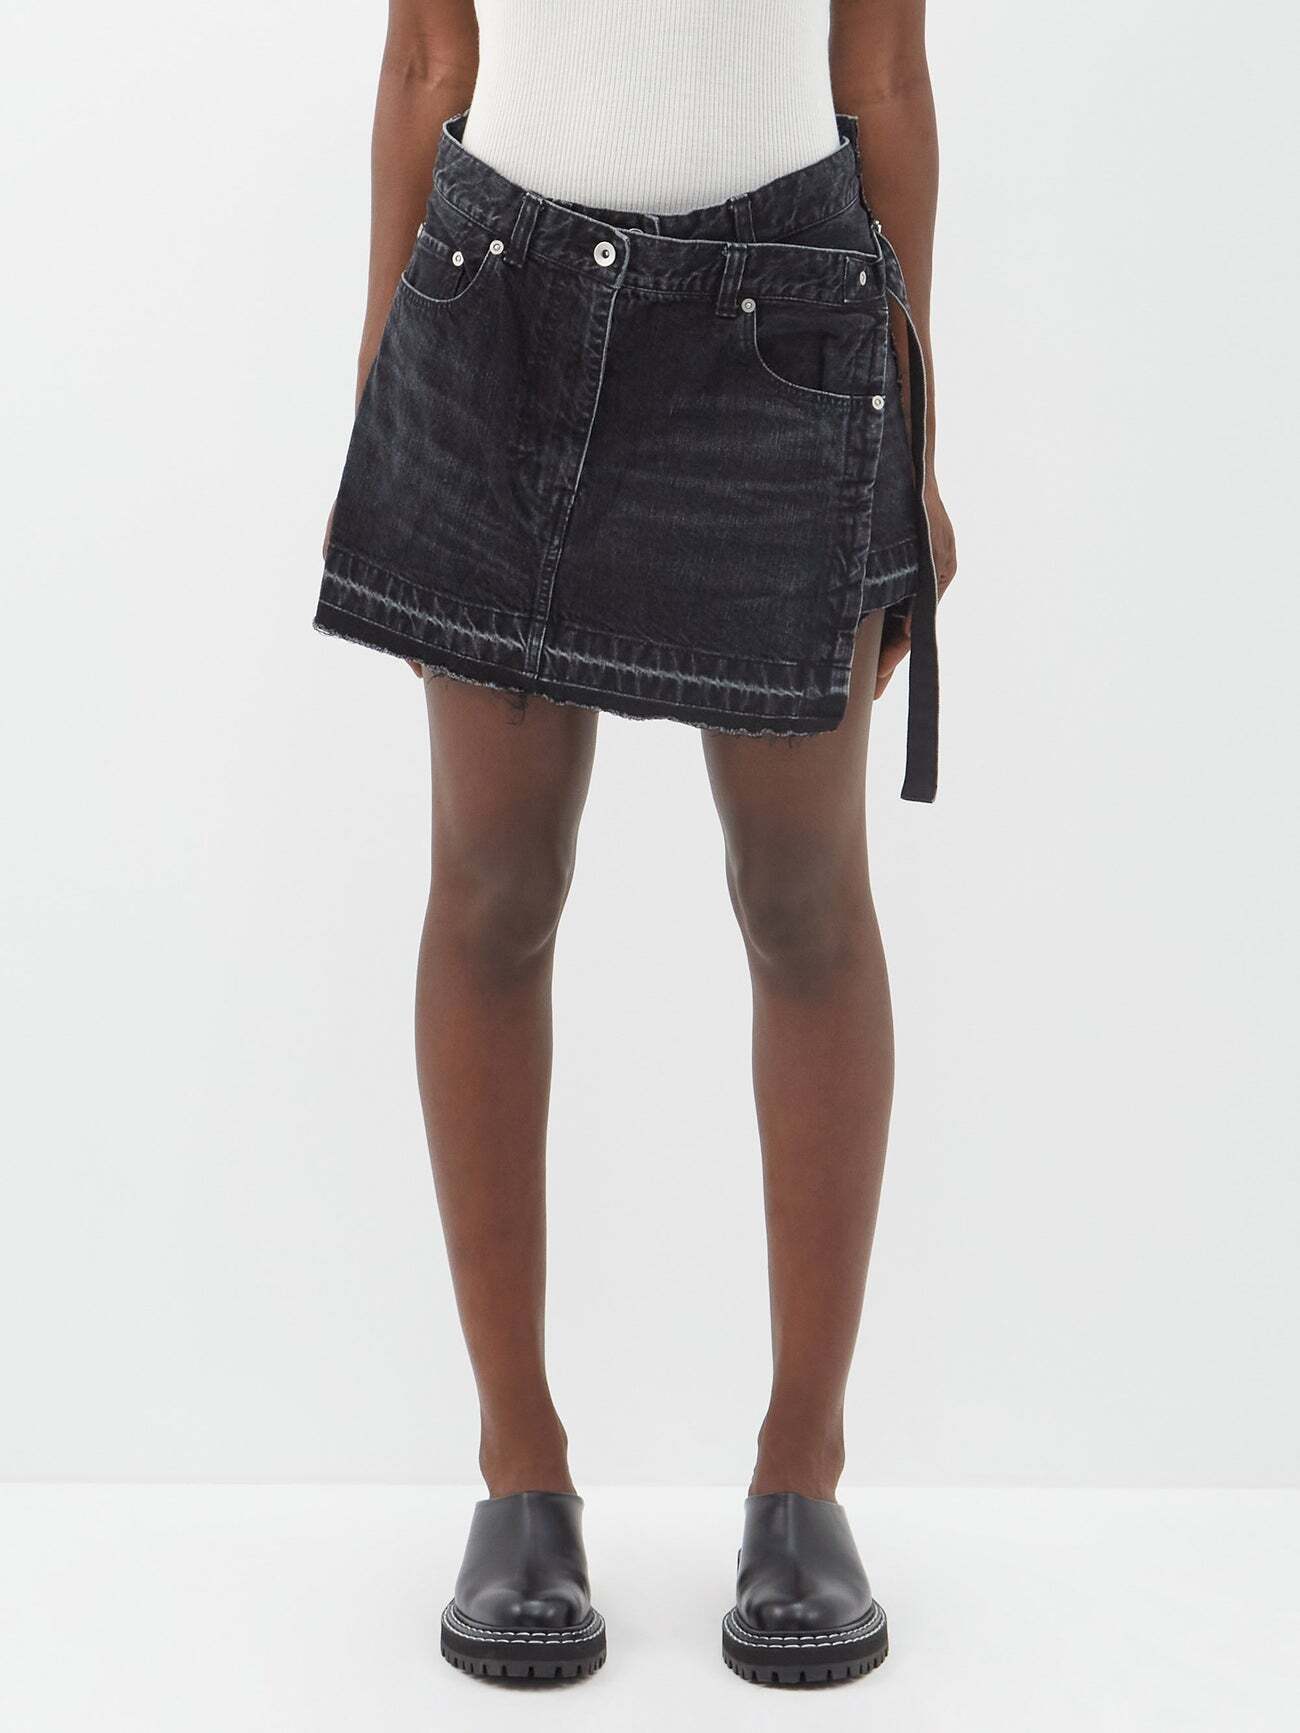 Sacai - Asymmetric-front Tie-side Denim Shorts - Womens - Black